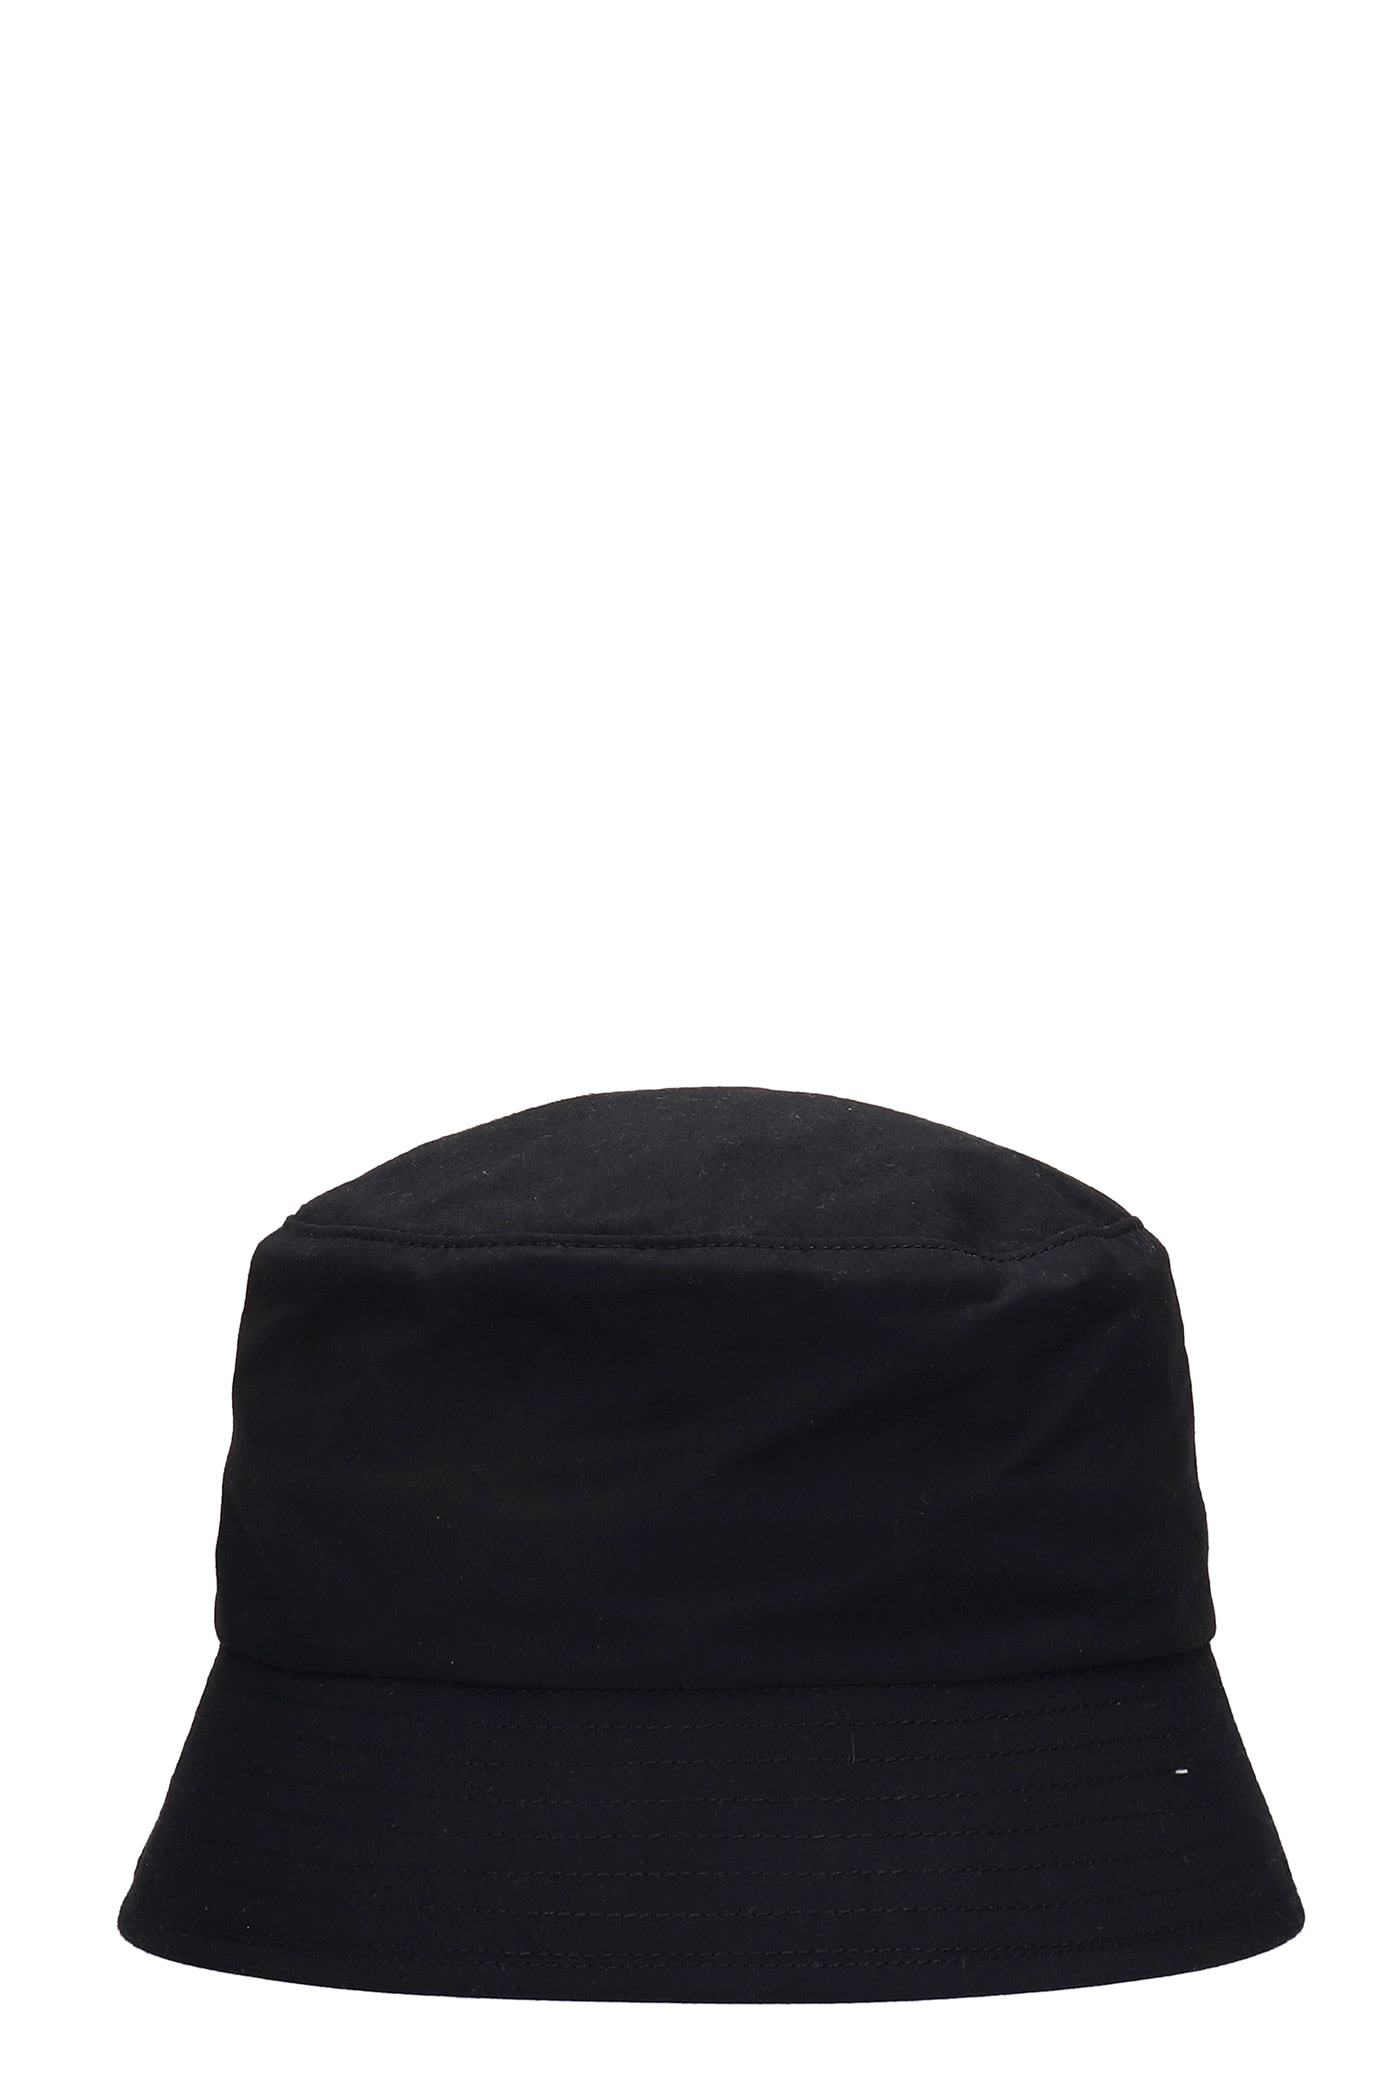 Craig Green Hats In Black Cotton